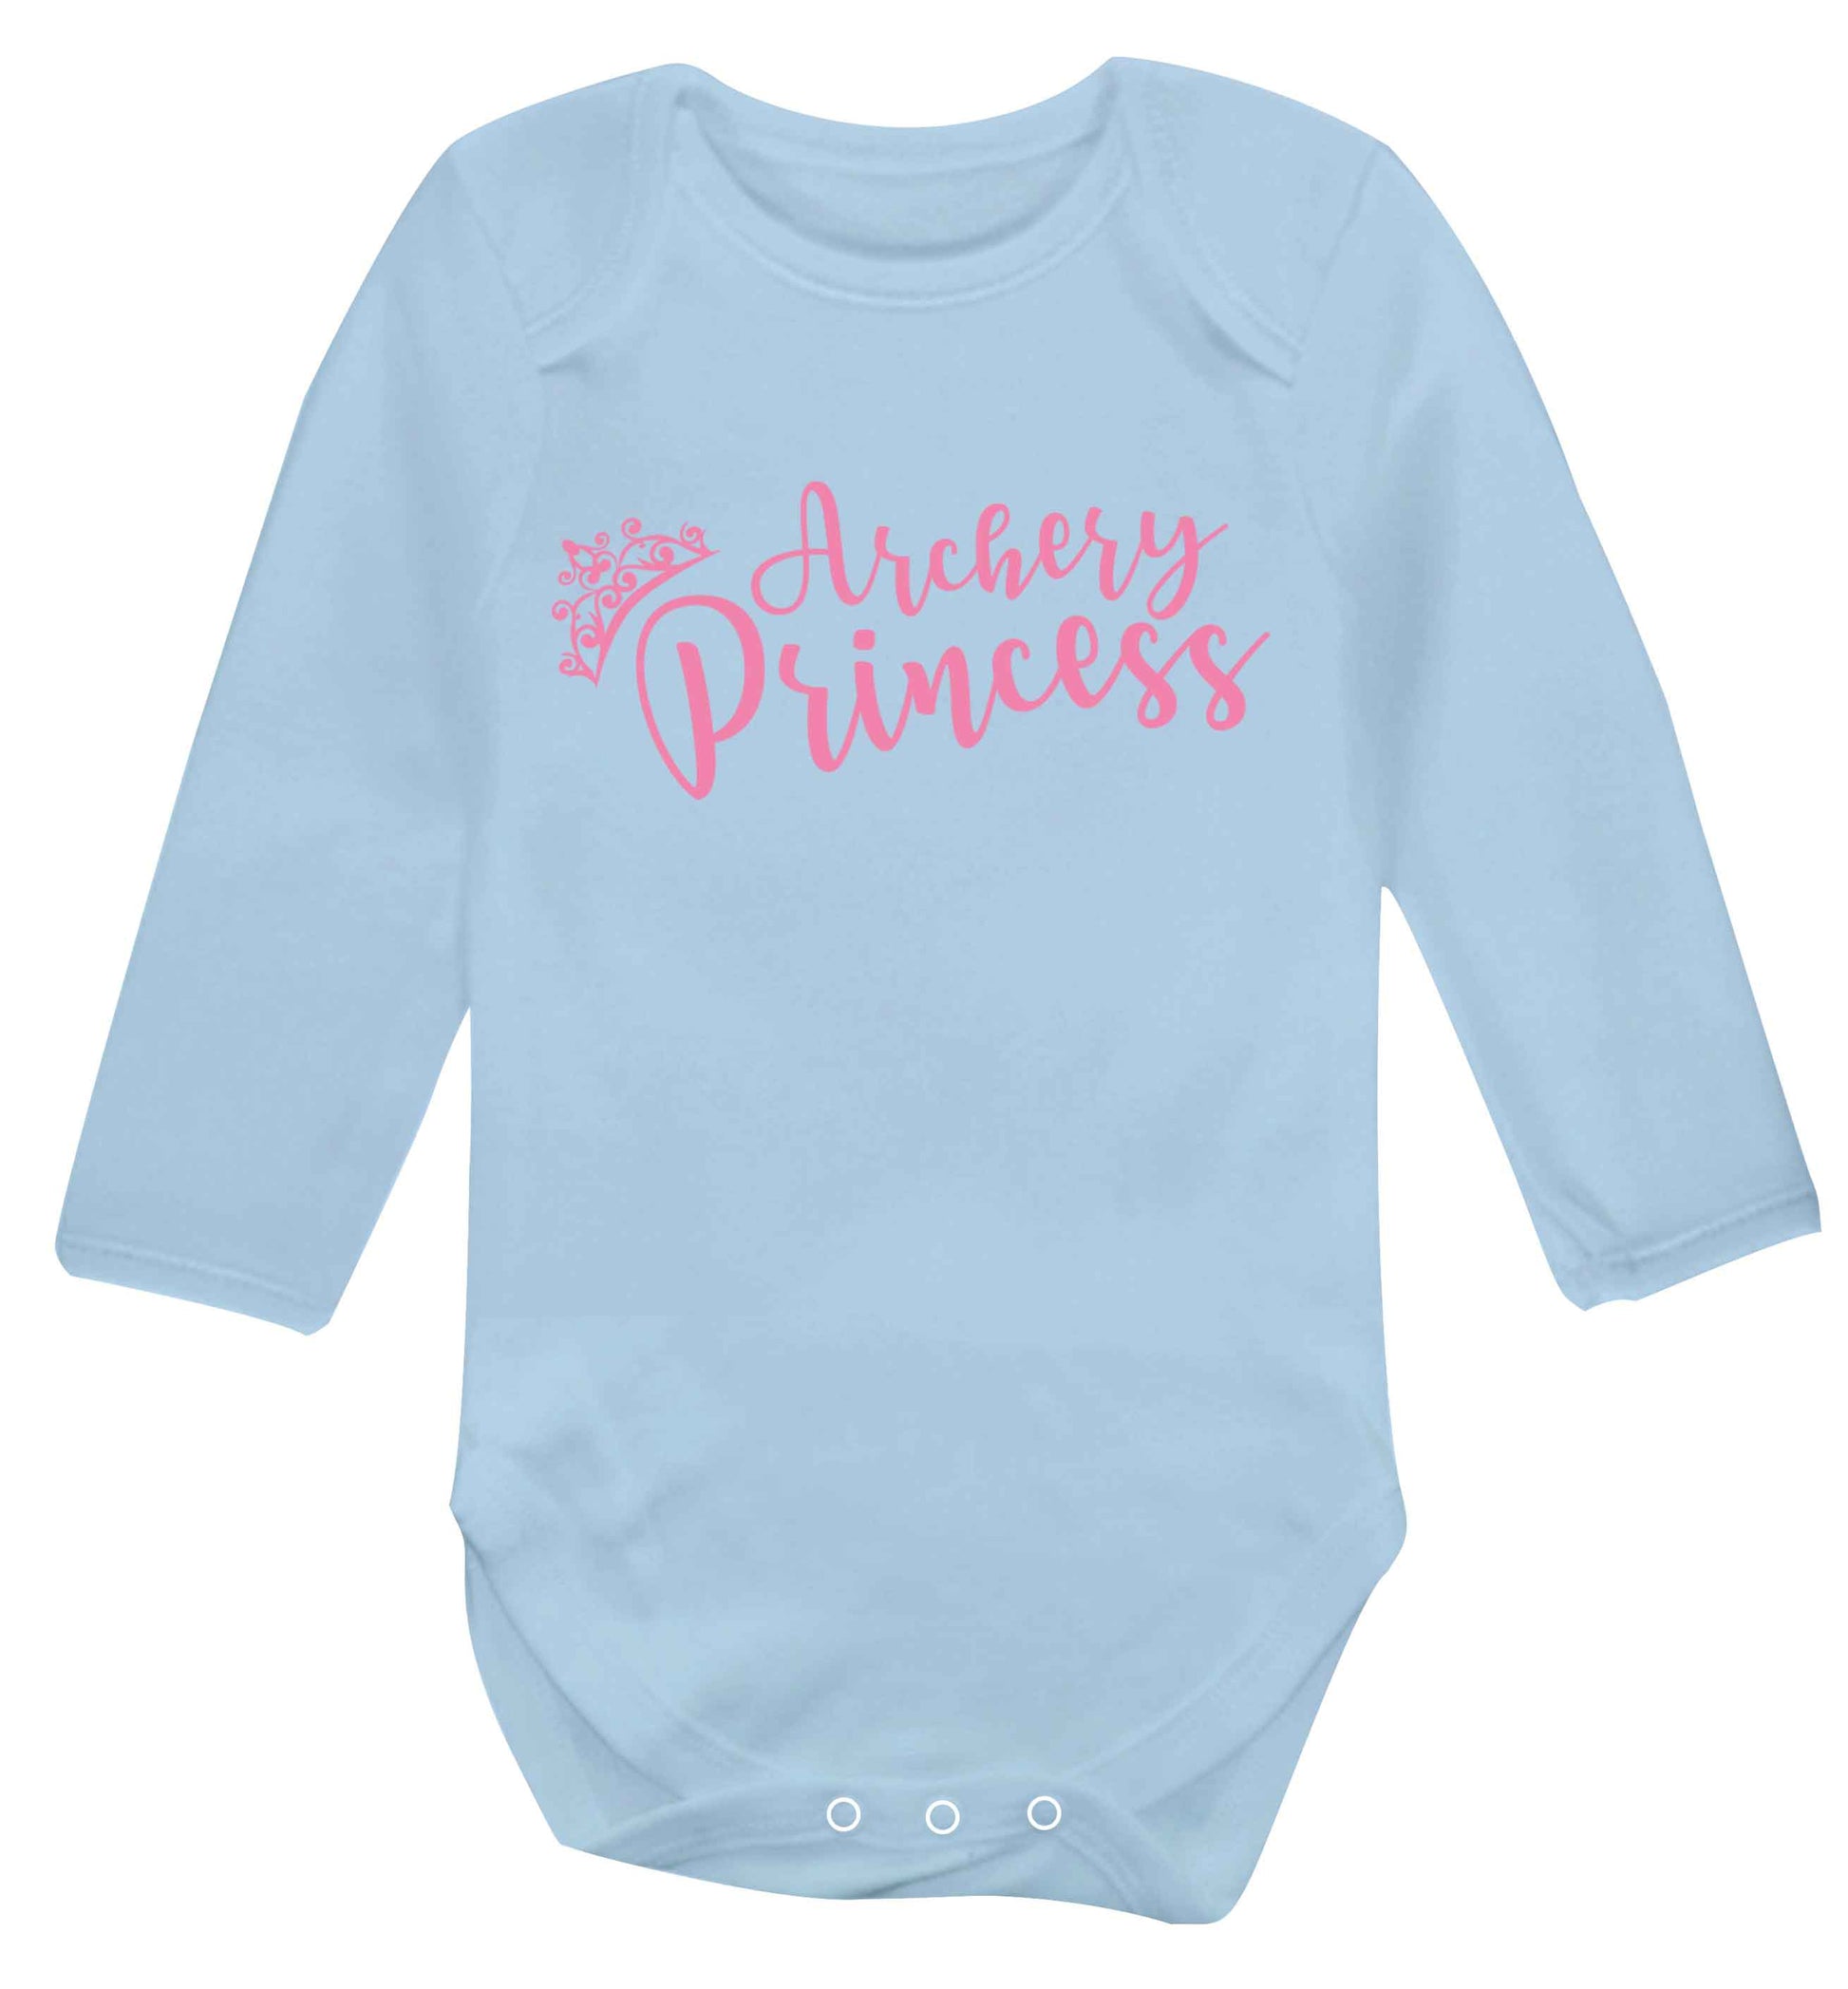 Archery princess Baby Vest long sleeved pale blue 6-12 months